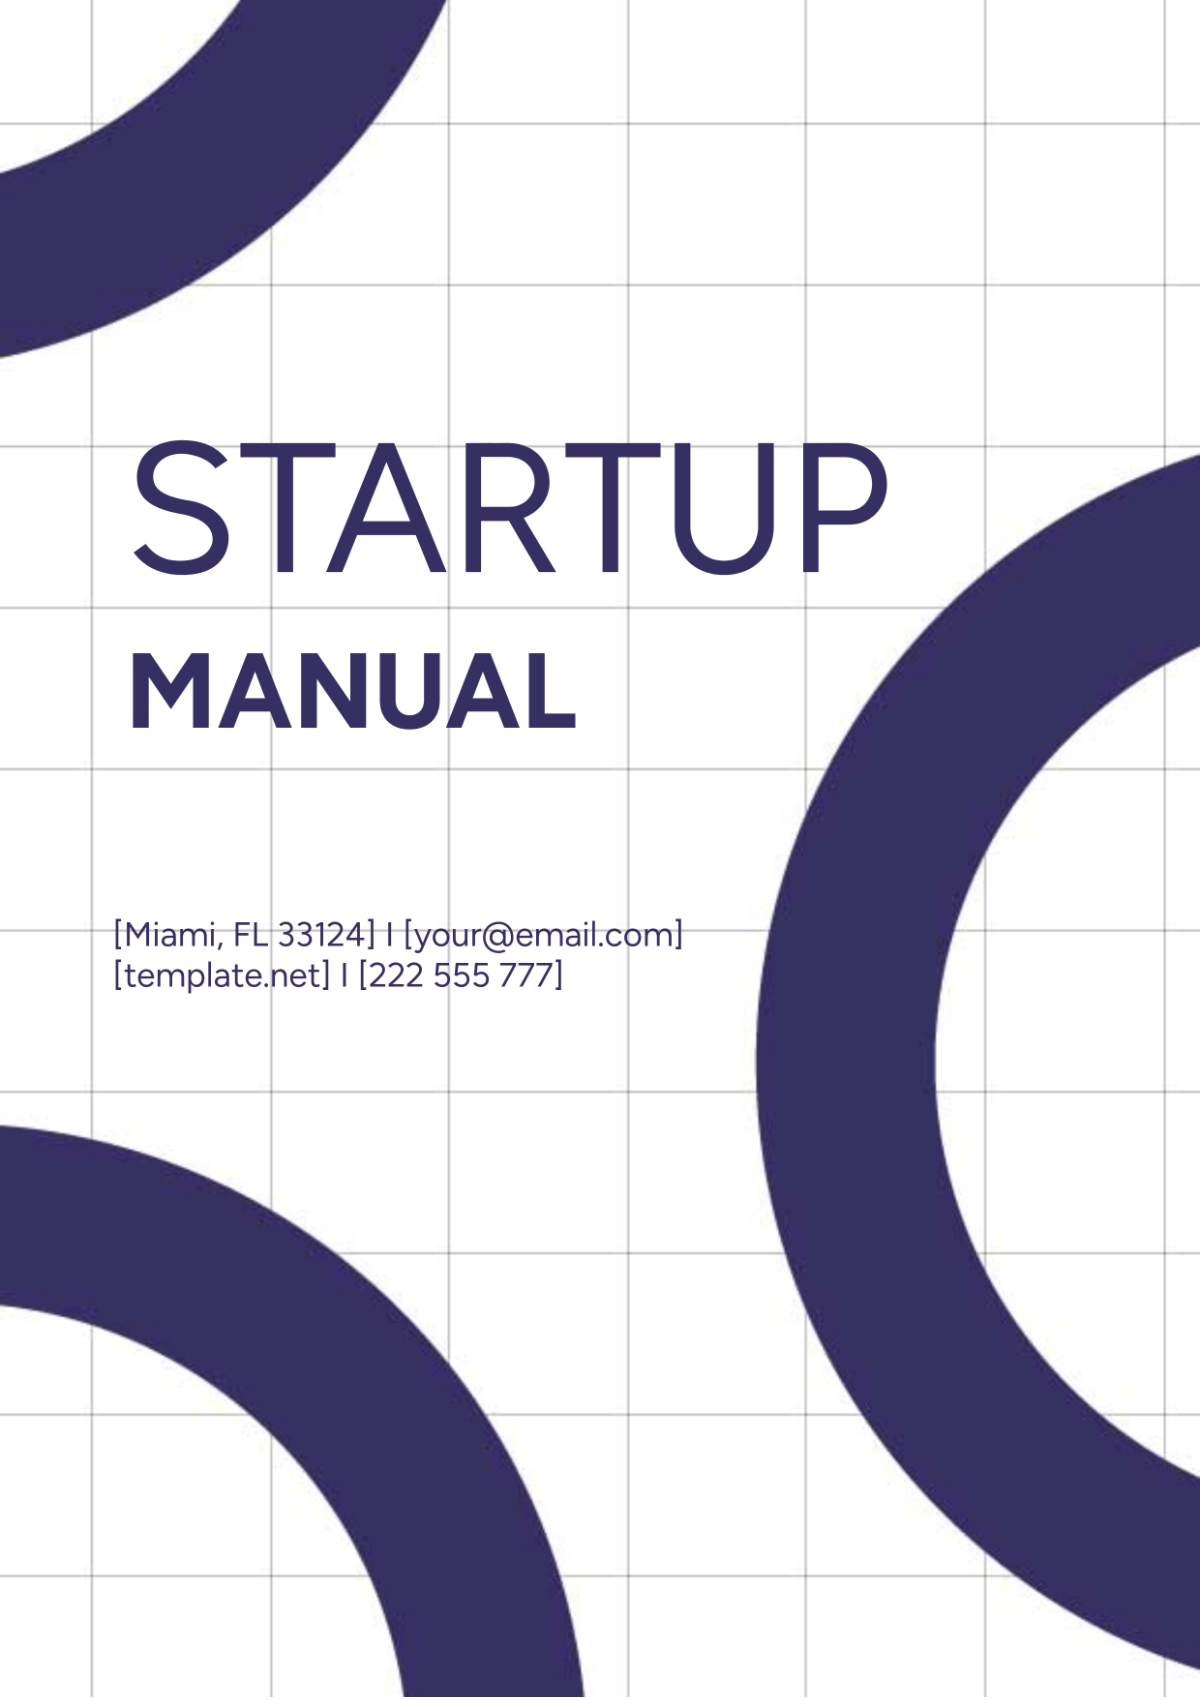 Startup Manual Template